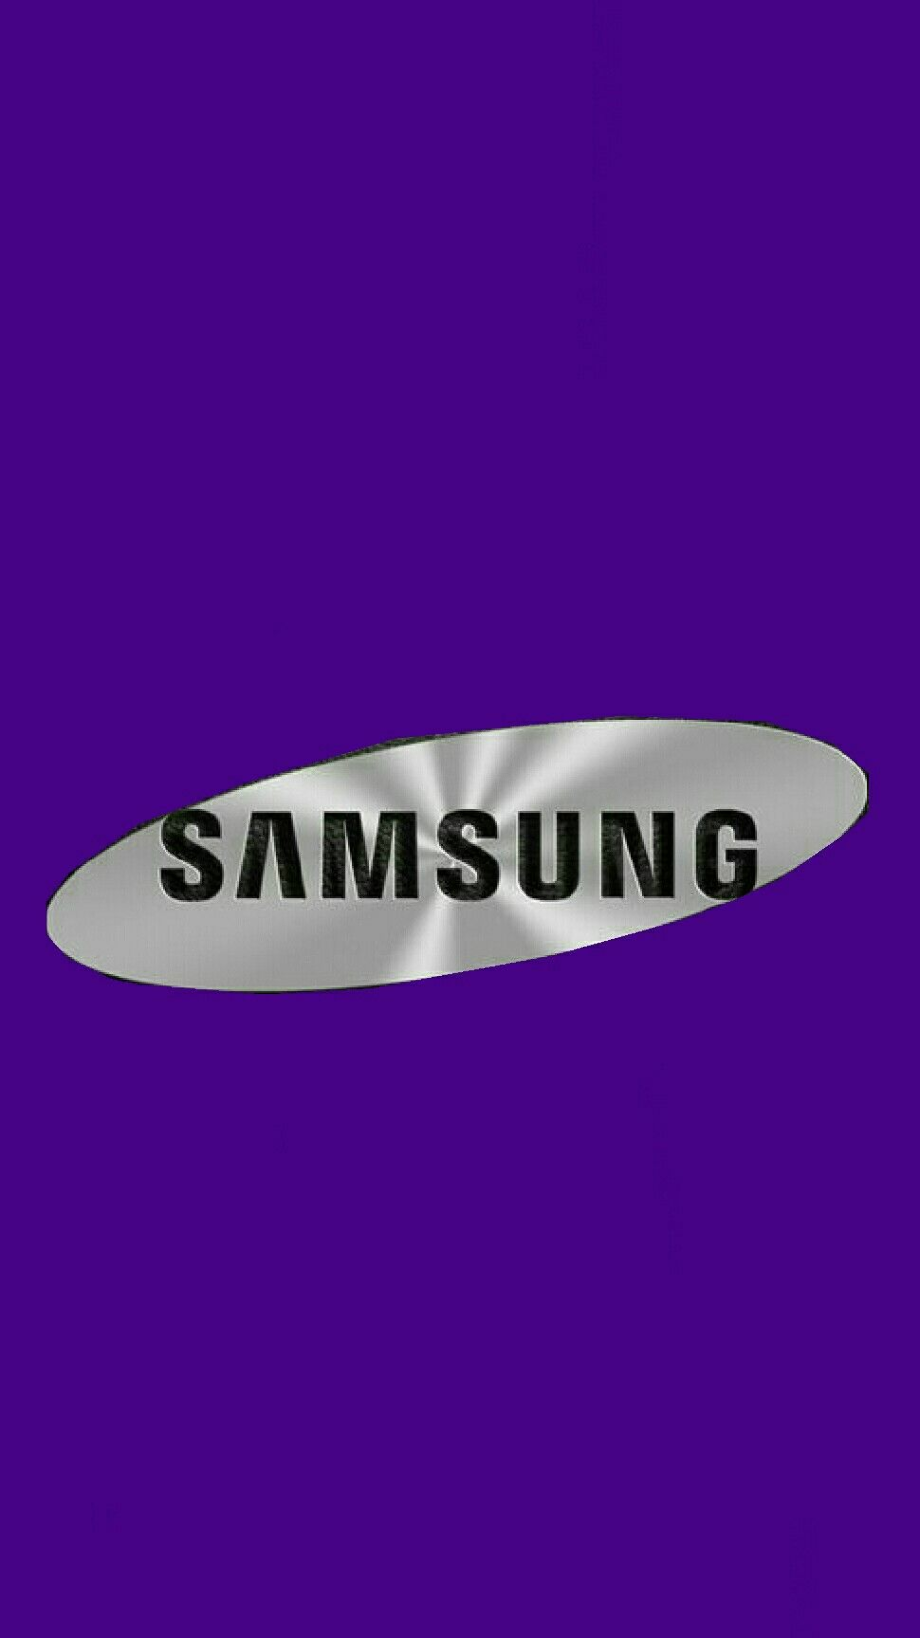 samsung logo android